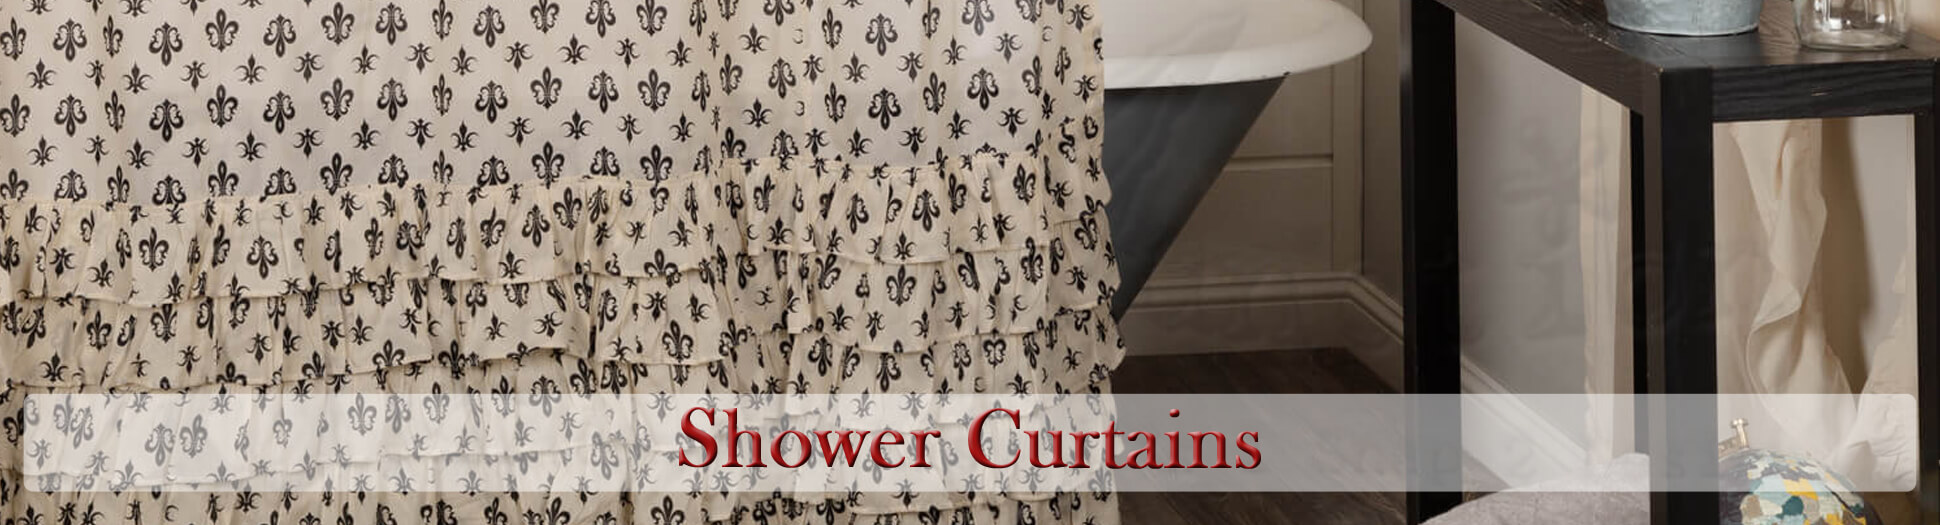 Shower Curtains & Bath Accessories